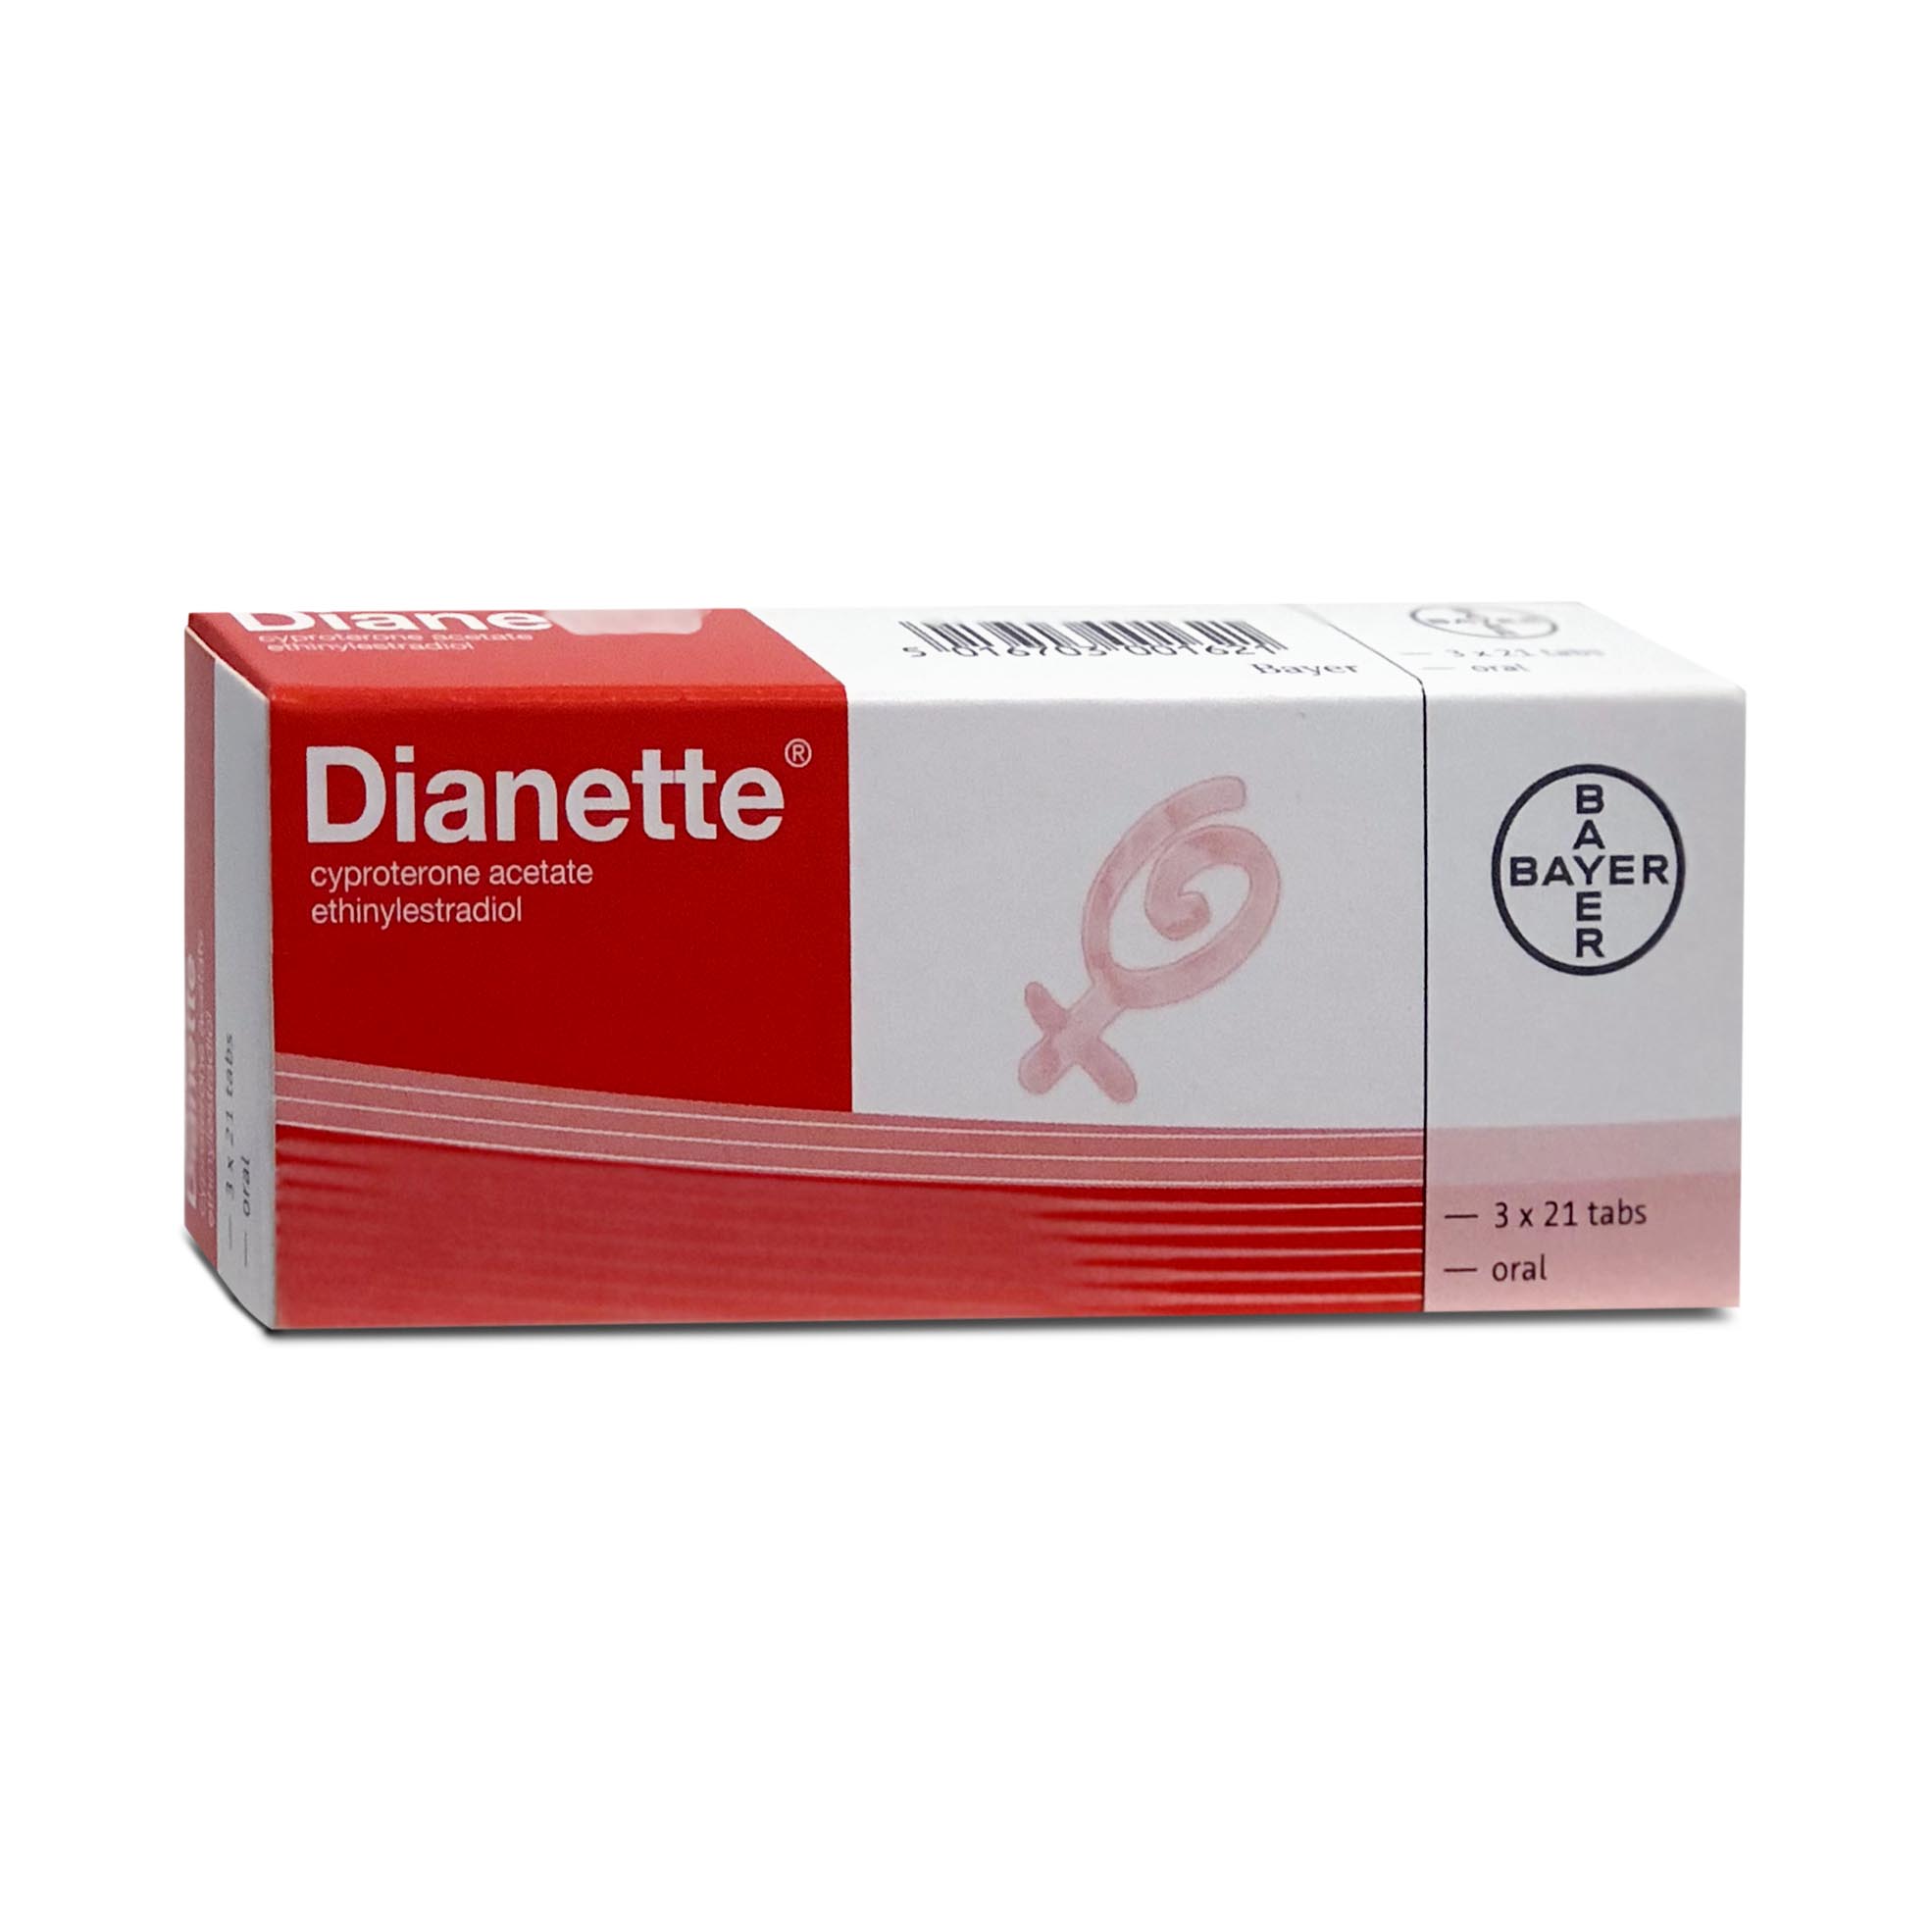 Dianette 3 x 21 tablets Bayer